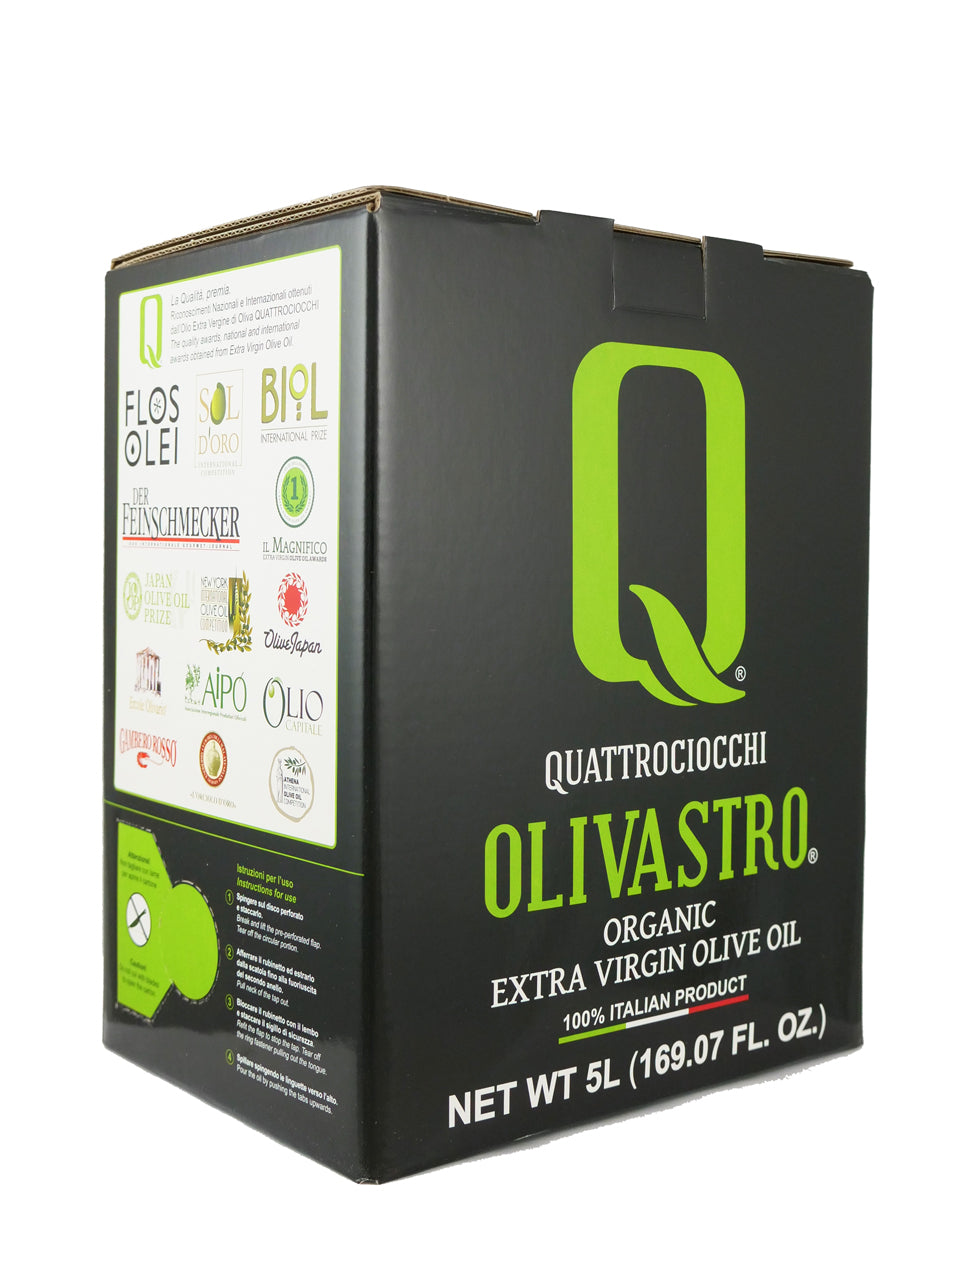 Quattrociocchi Olivastro 5L Bag In Box